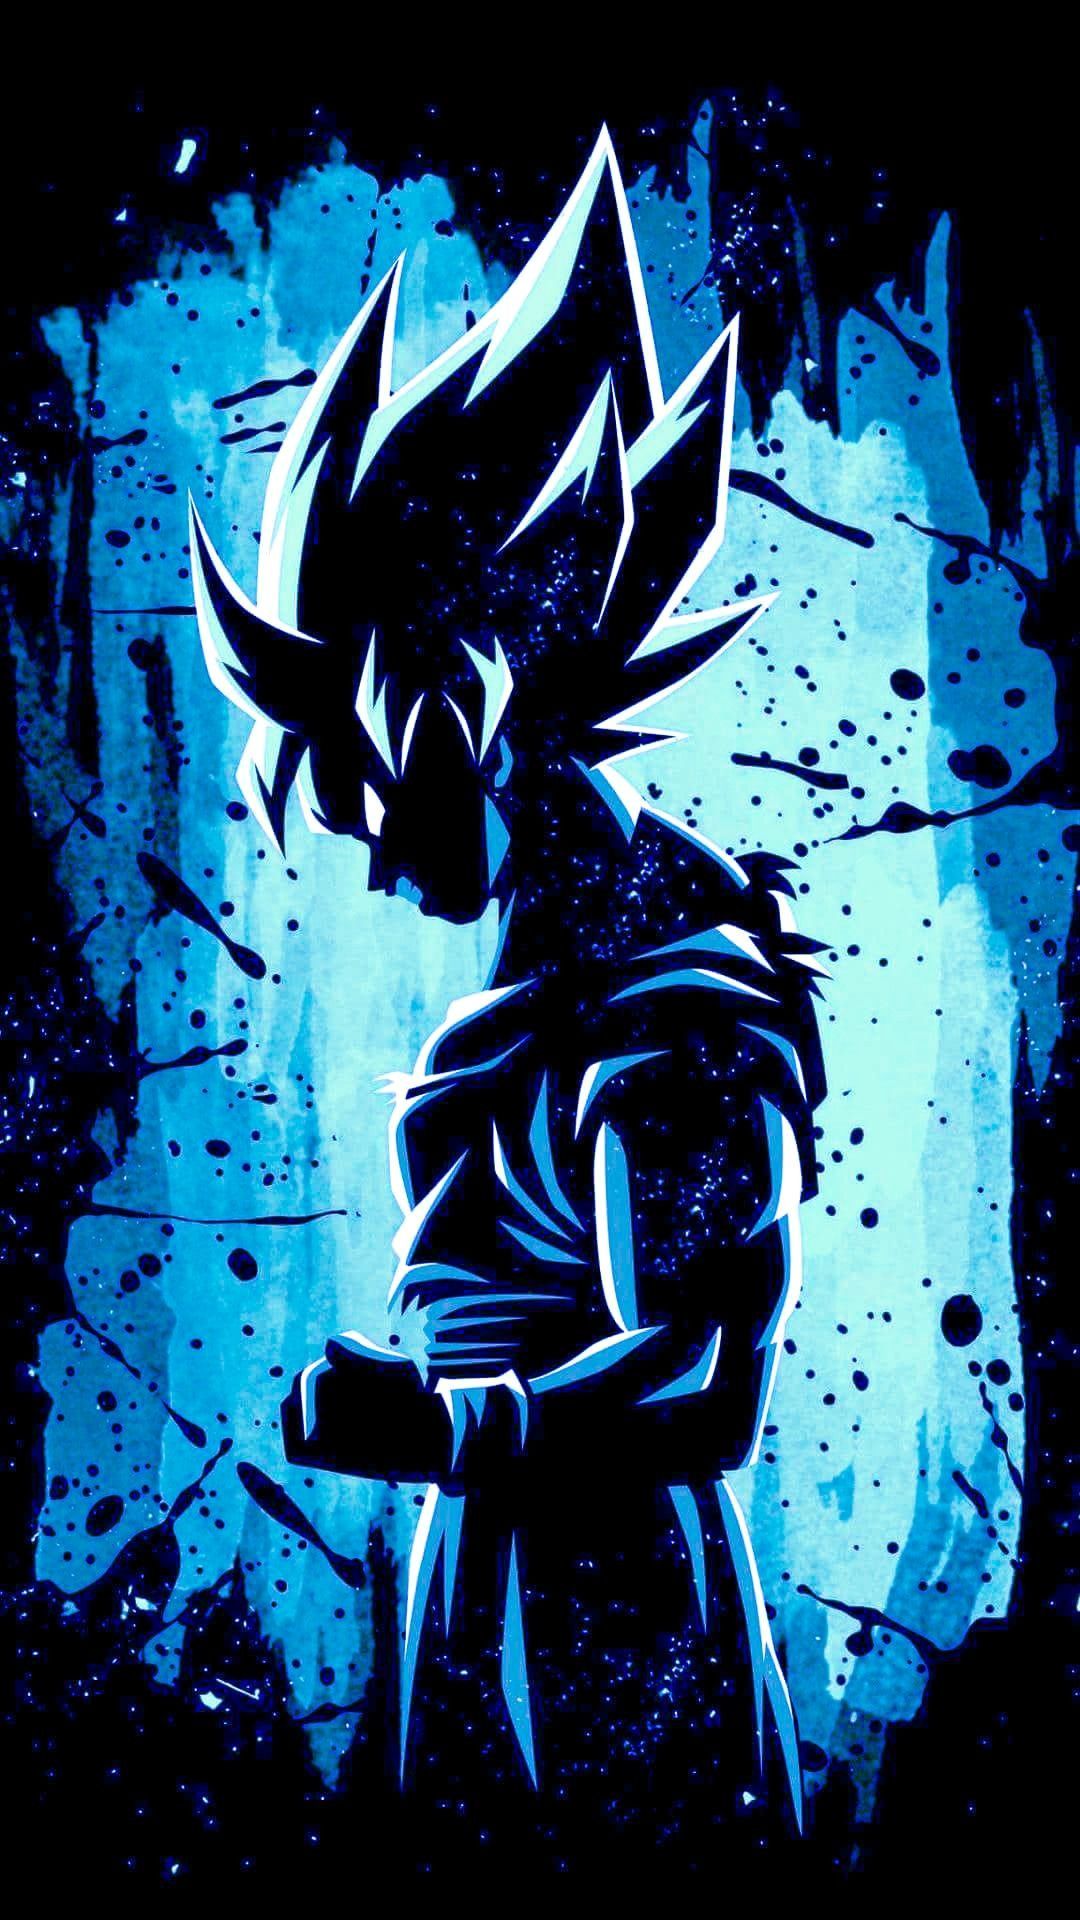 Inspirational Goku Live Wallpaper iPhone 7 Wall Black. Dragon ball wallpaper, Dragon ball super wallpaper, Anime dragon ball super